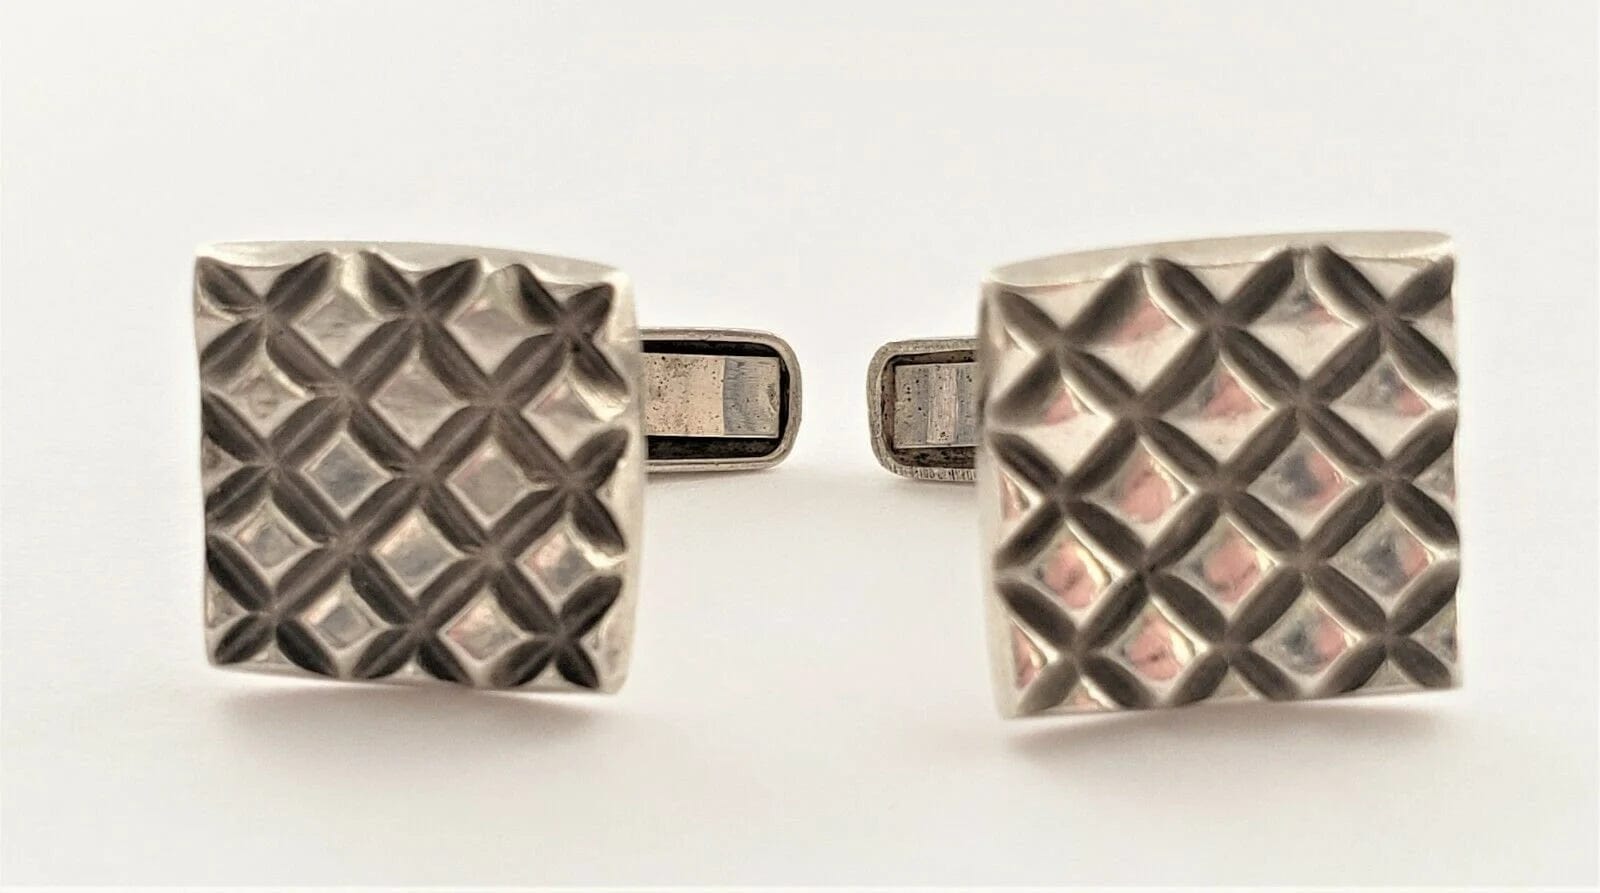 Allan Adler Jewelry Designer Allan Adler Sterling Silver Modernist Cross Hatch Cufflinks Circa 1950's